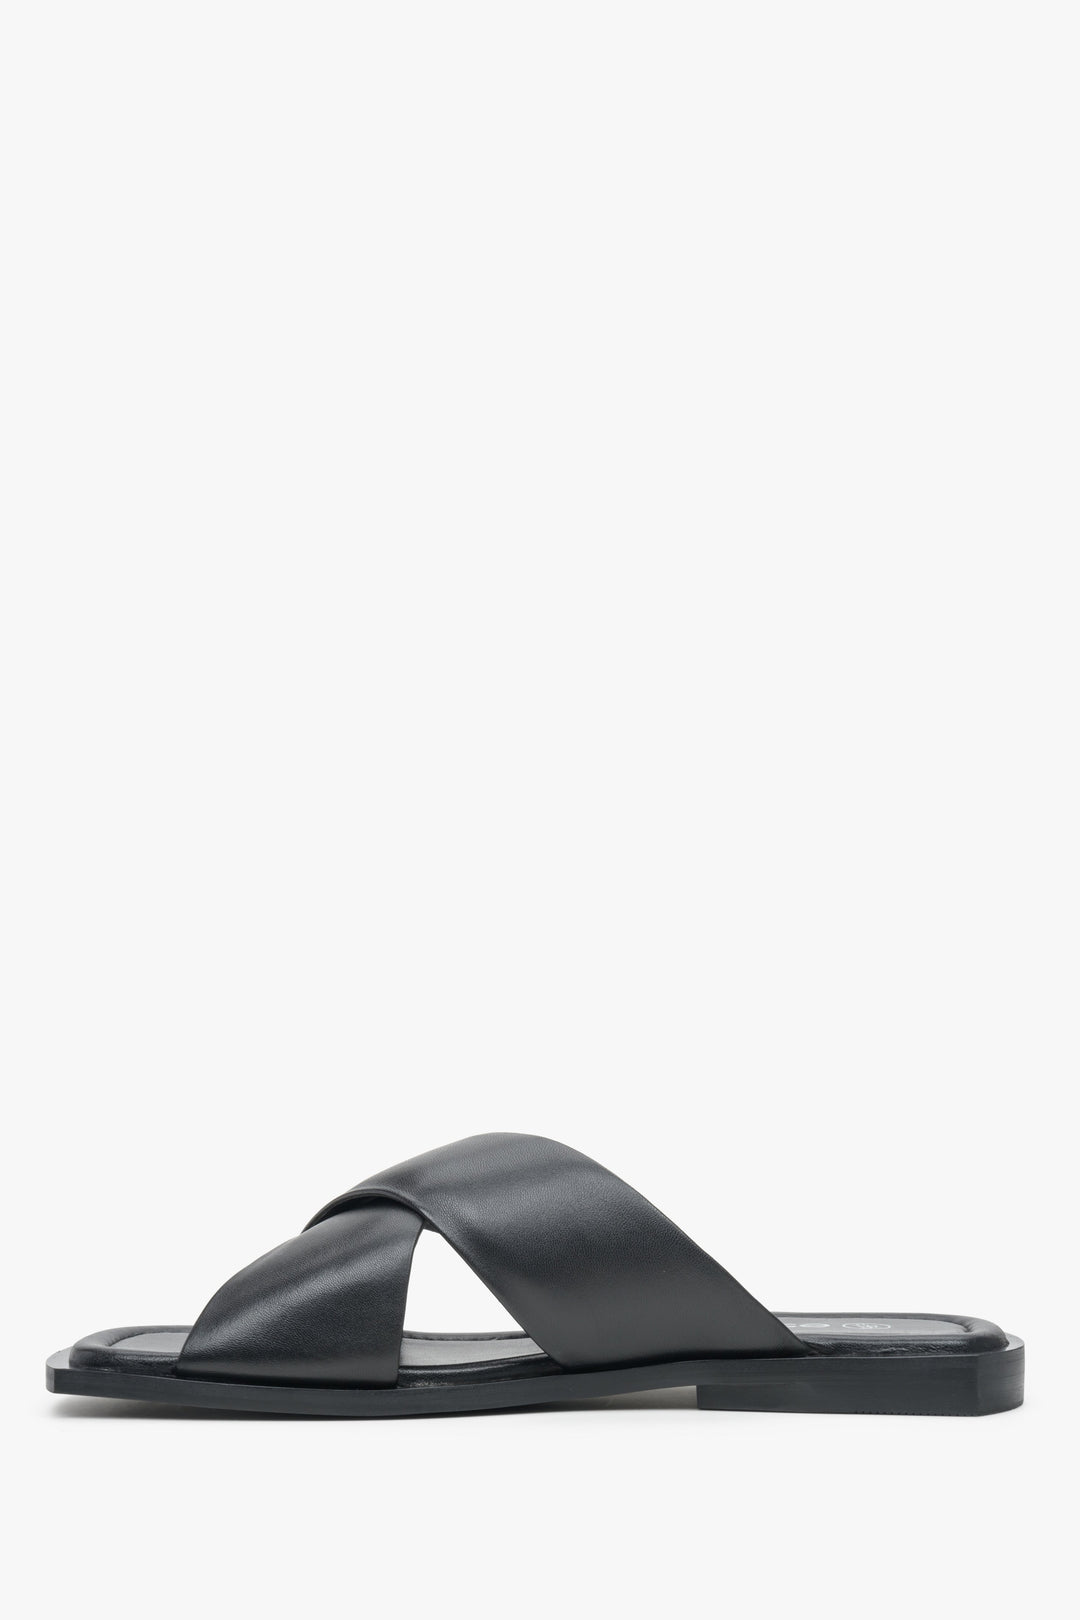 Estro women's slide sandals in black made of genuine leather - shoe profile.